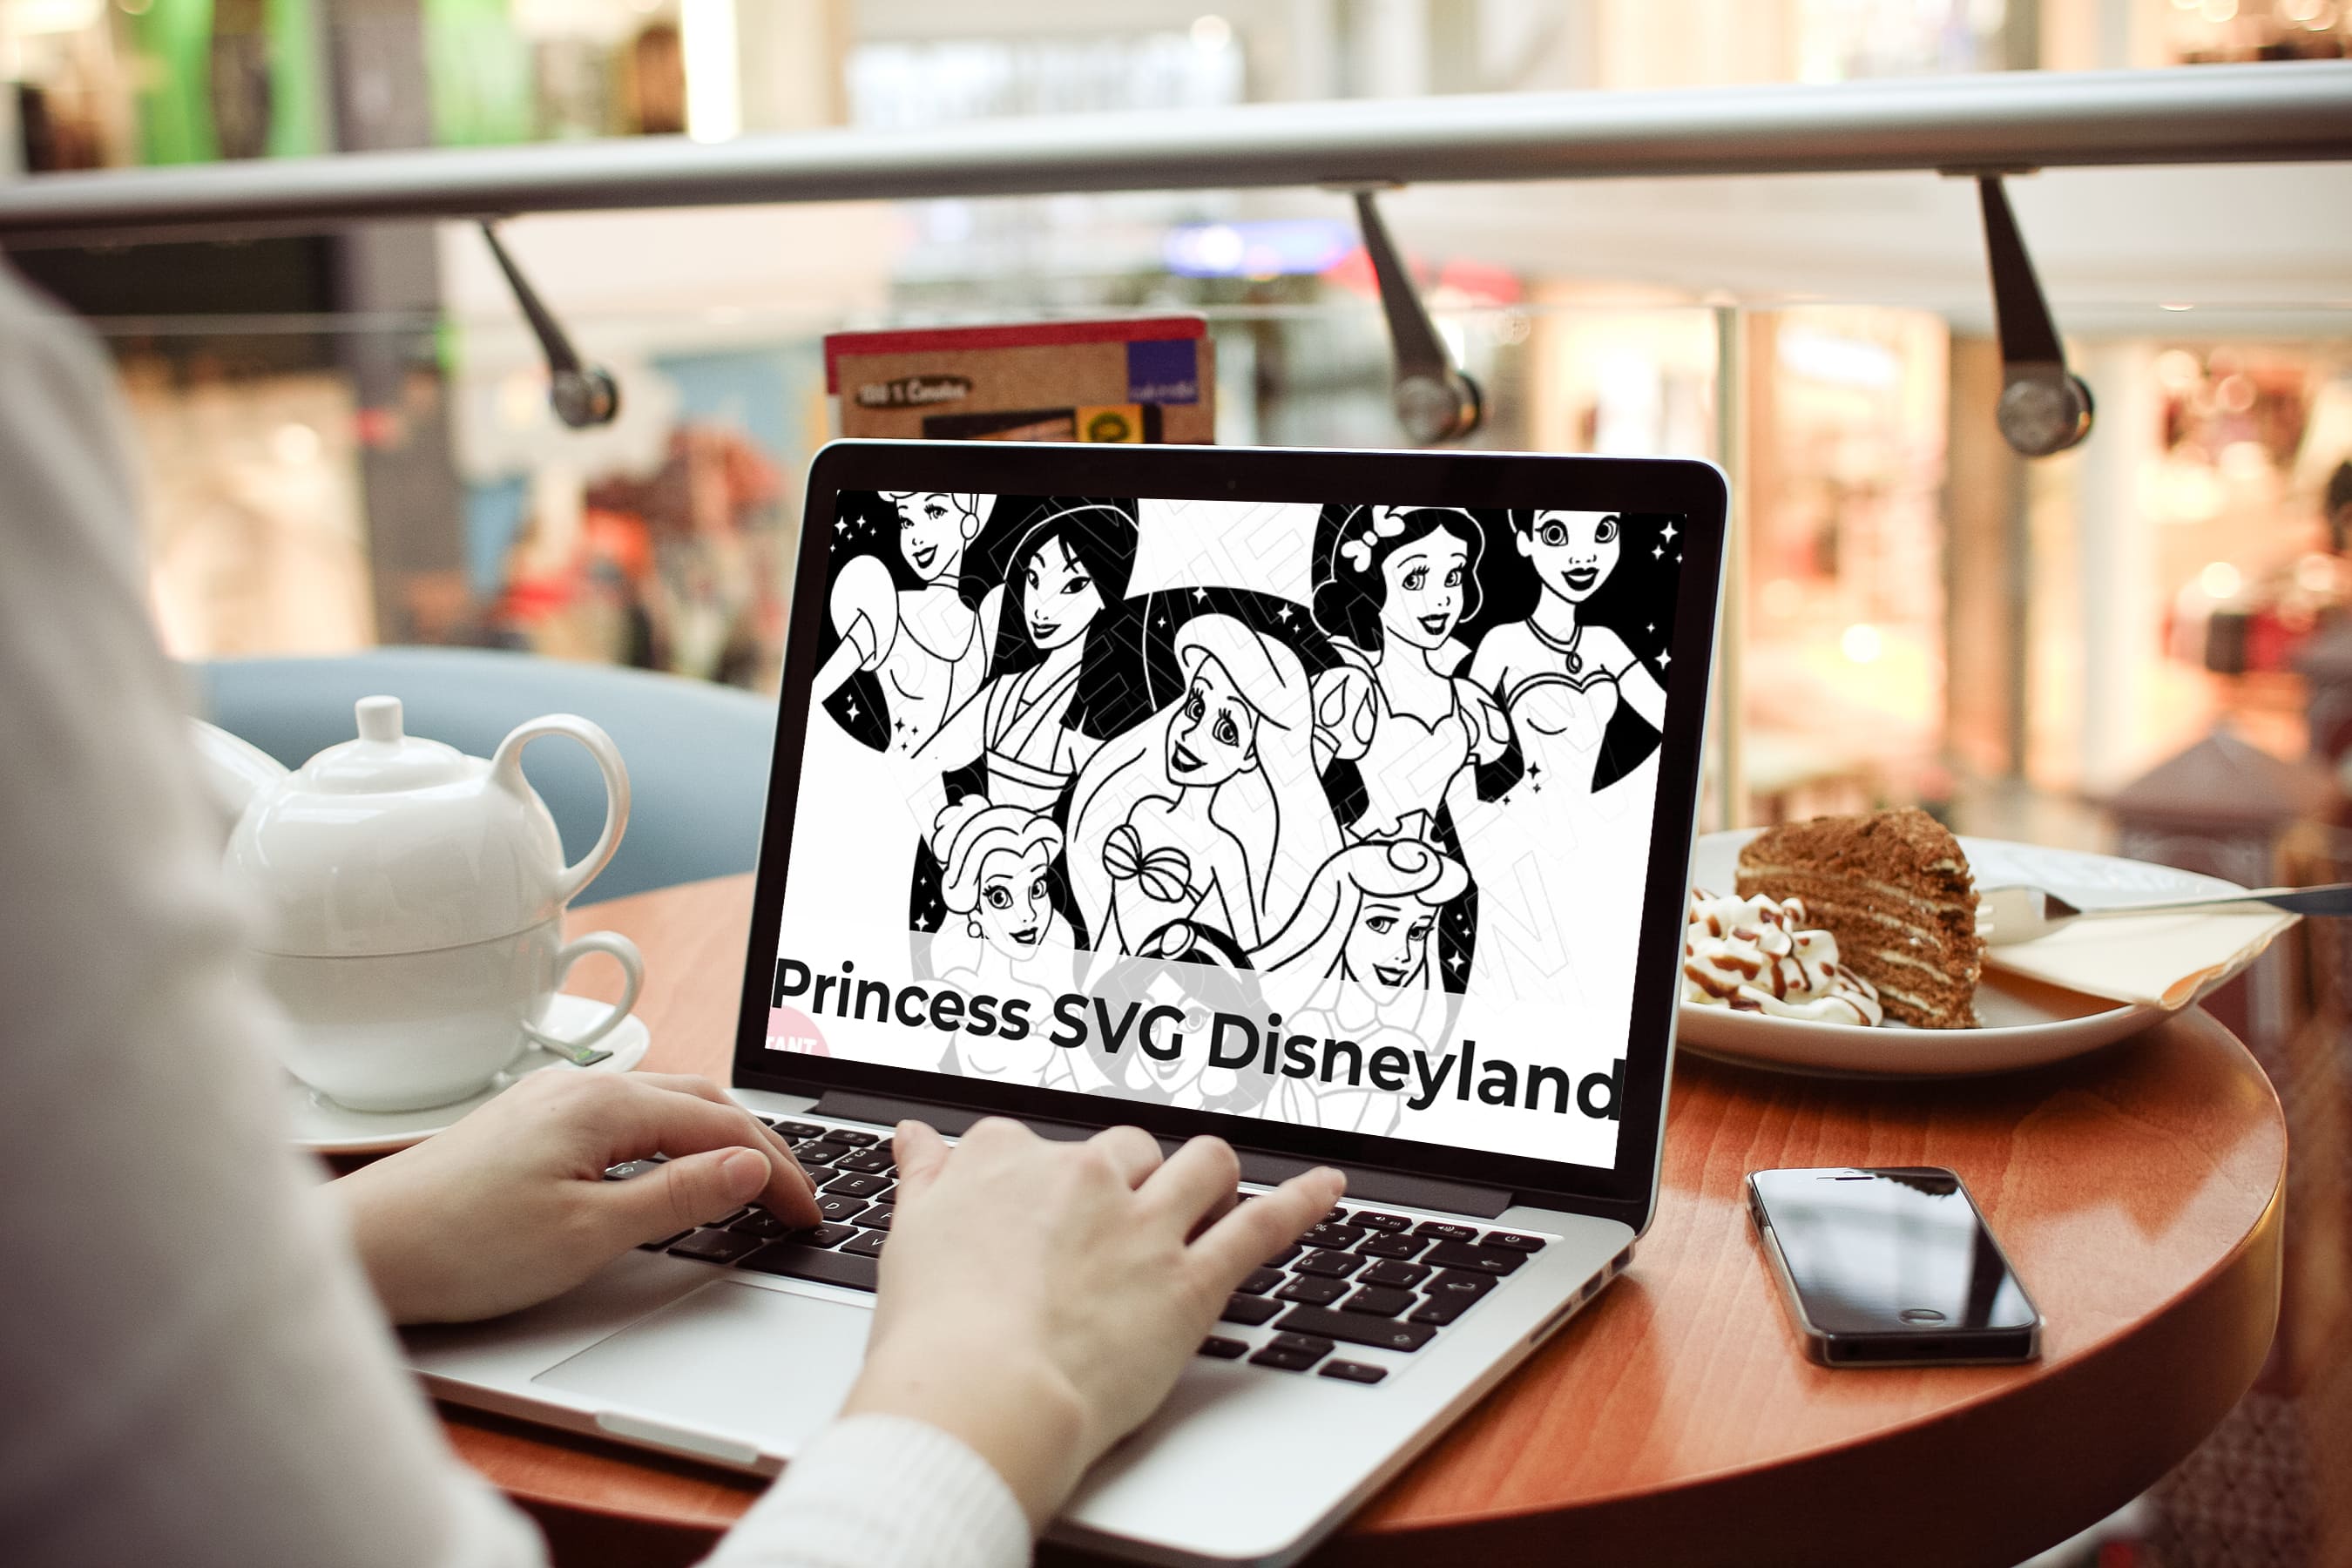 Laptop - Princess SVG Disneyland ears png clipart.